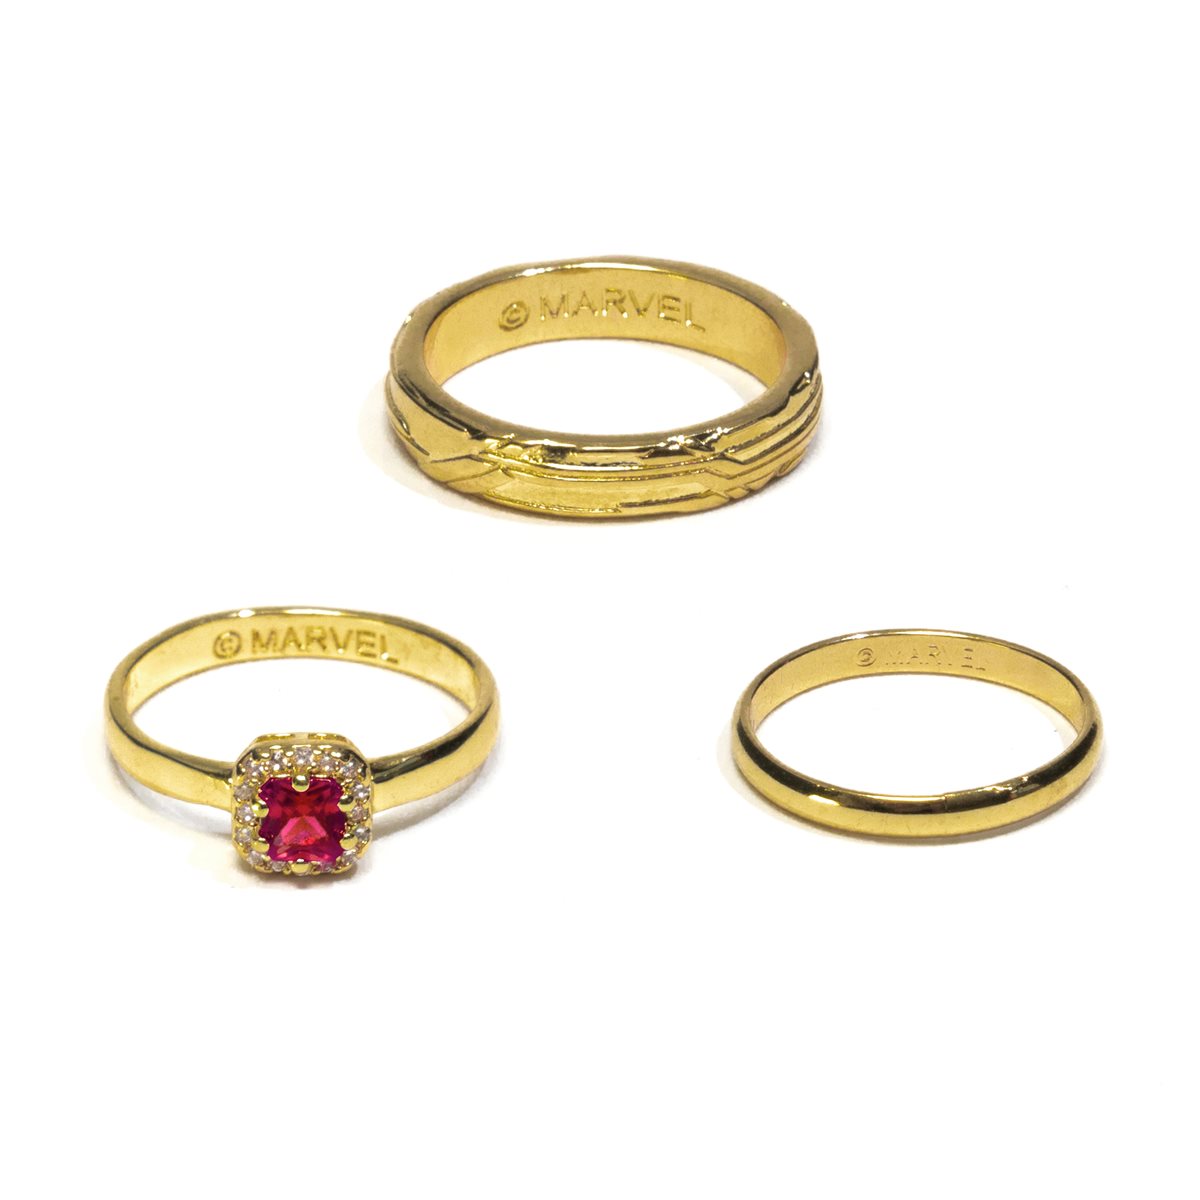 Wandavision Wedding Rings Prop Replica 3-piece Set Case EE for sale online 